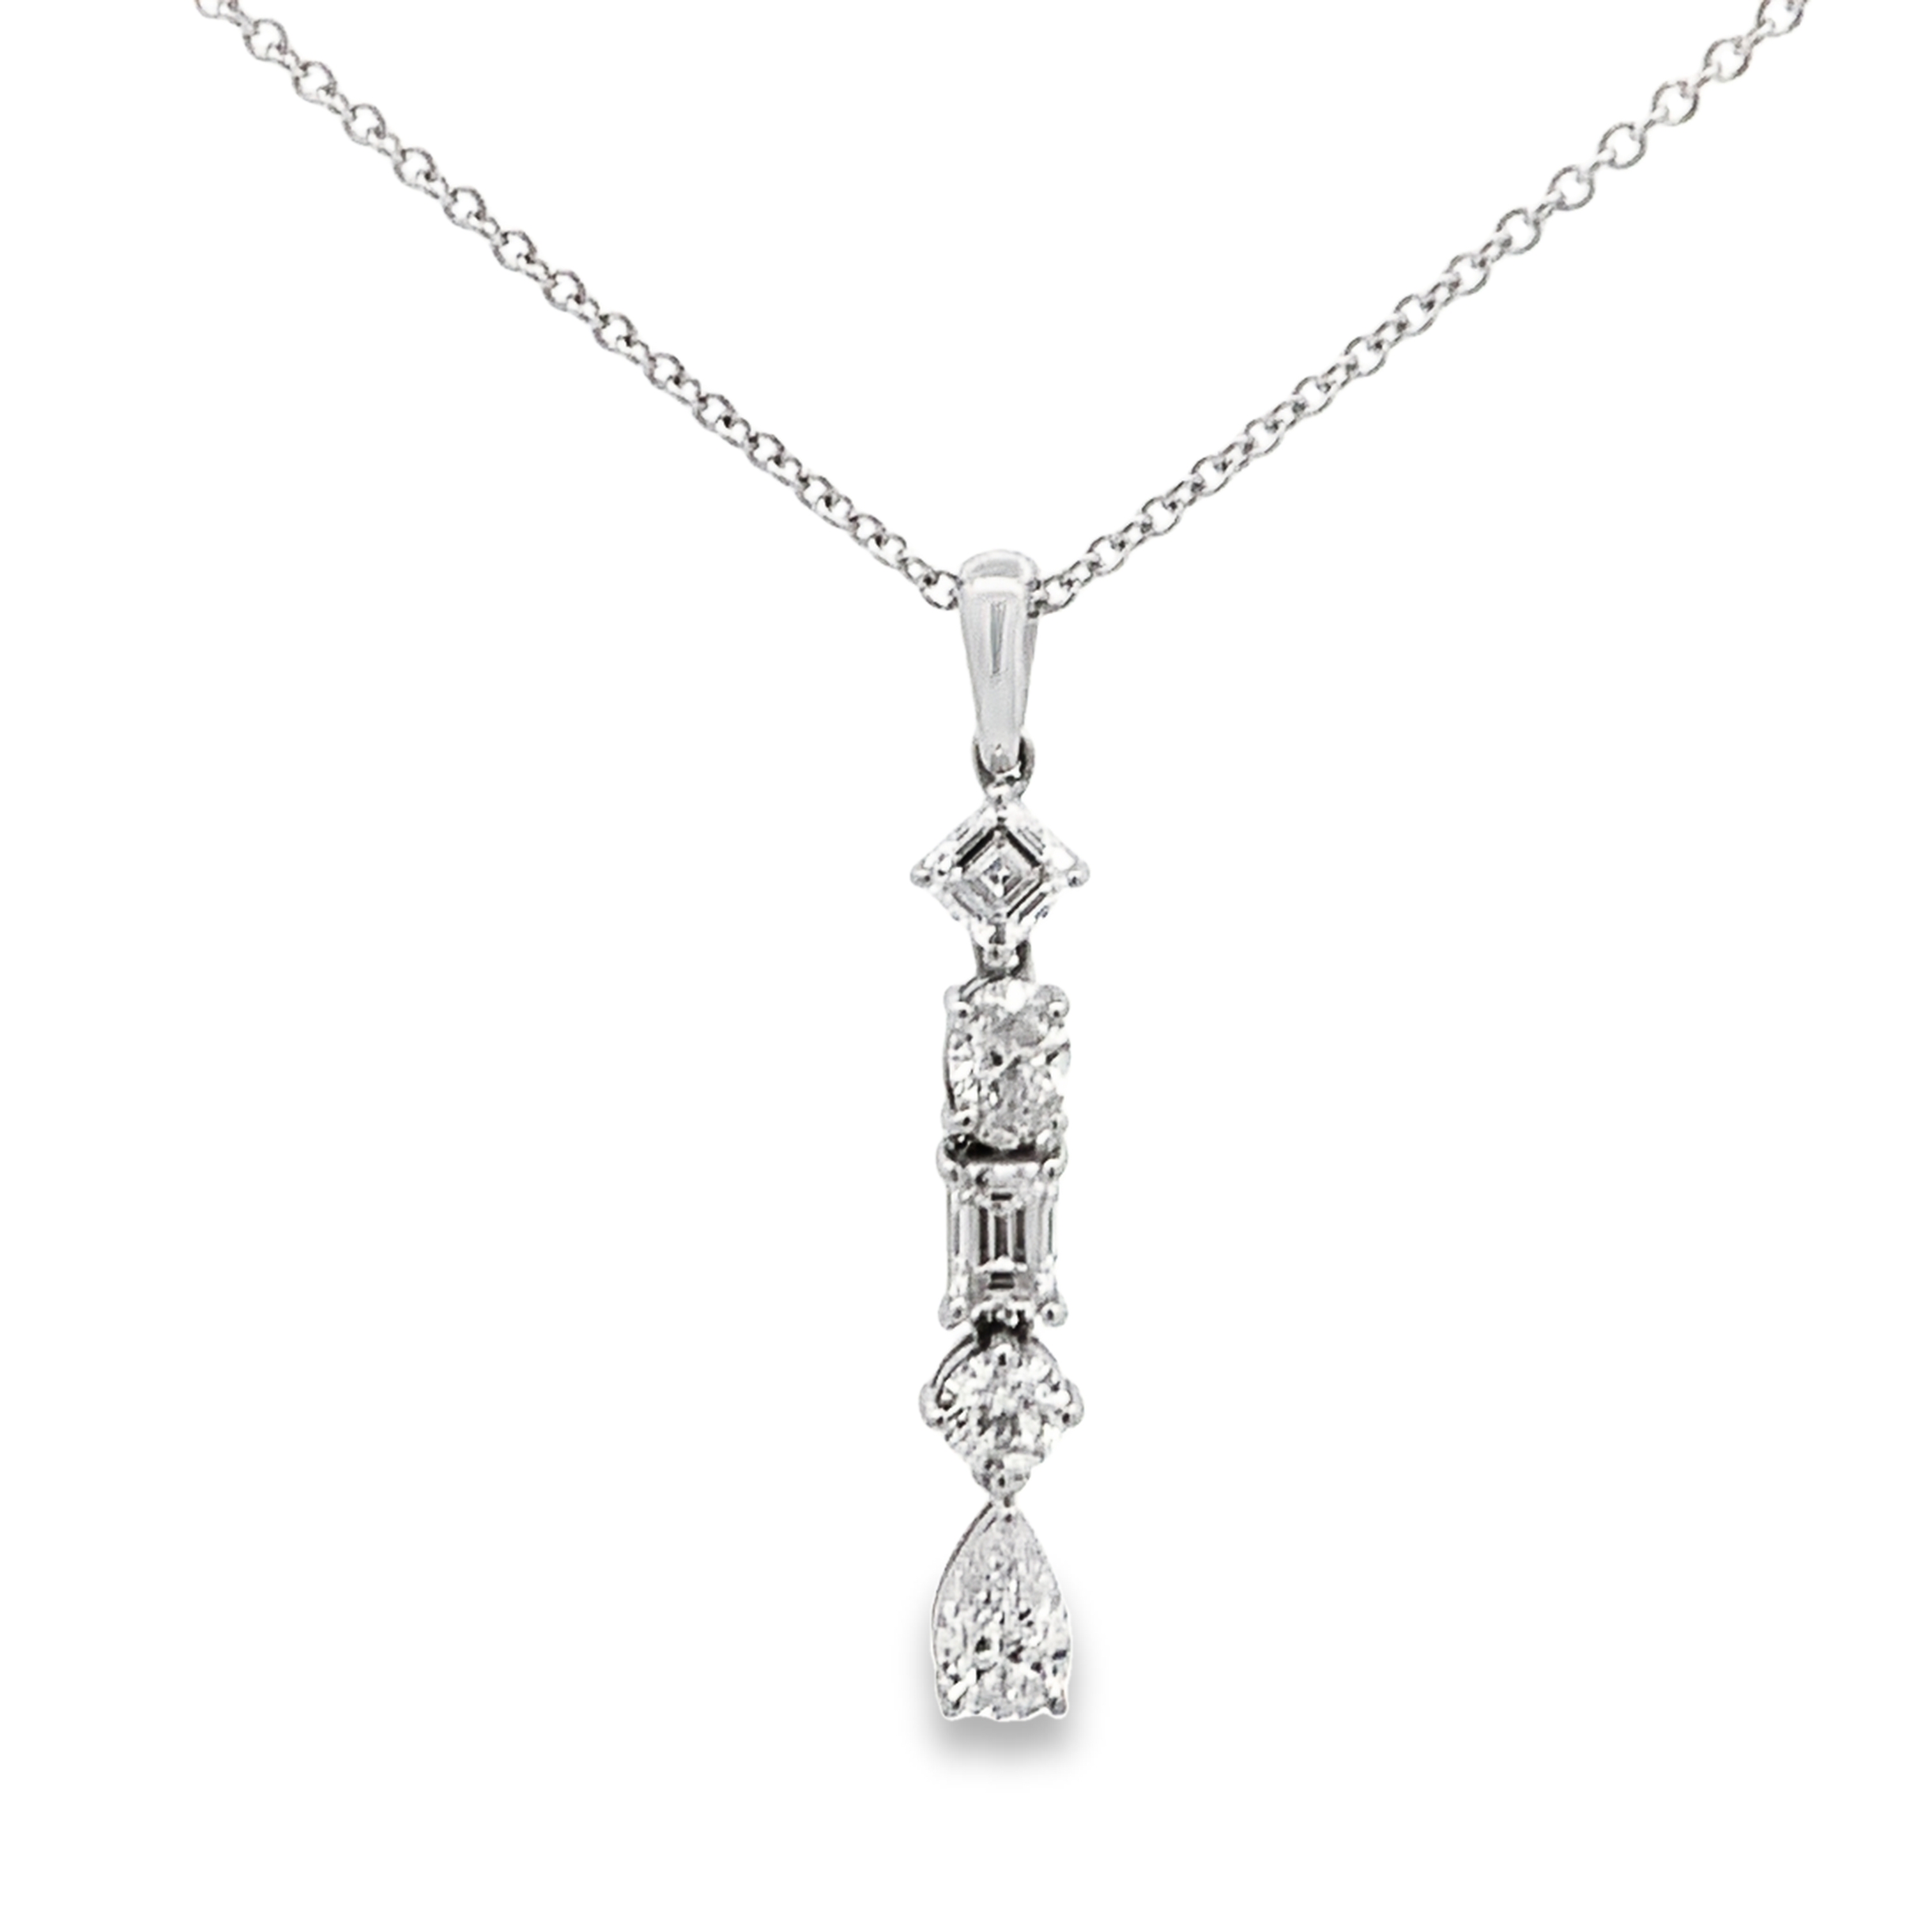 Norman Silverman 18K White Gold Fancy-Shape Diamond Pendant Necklace